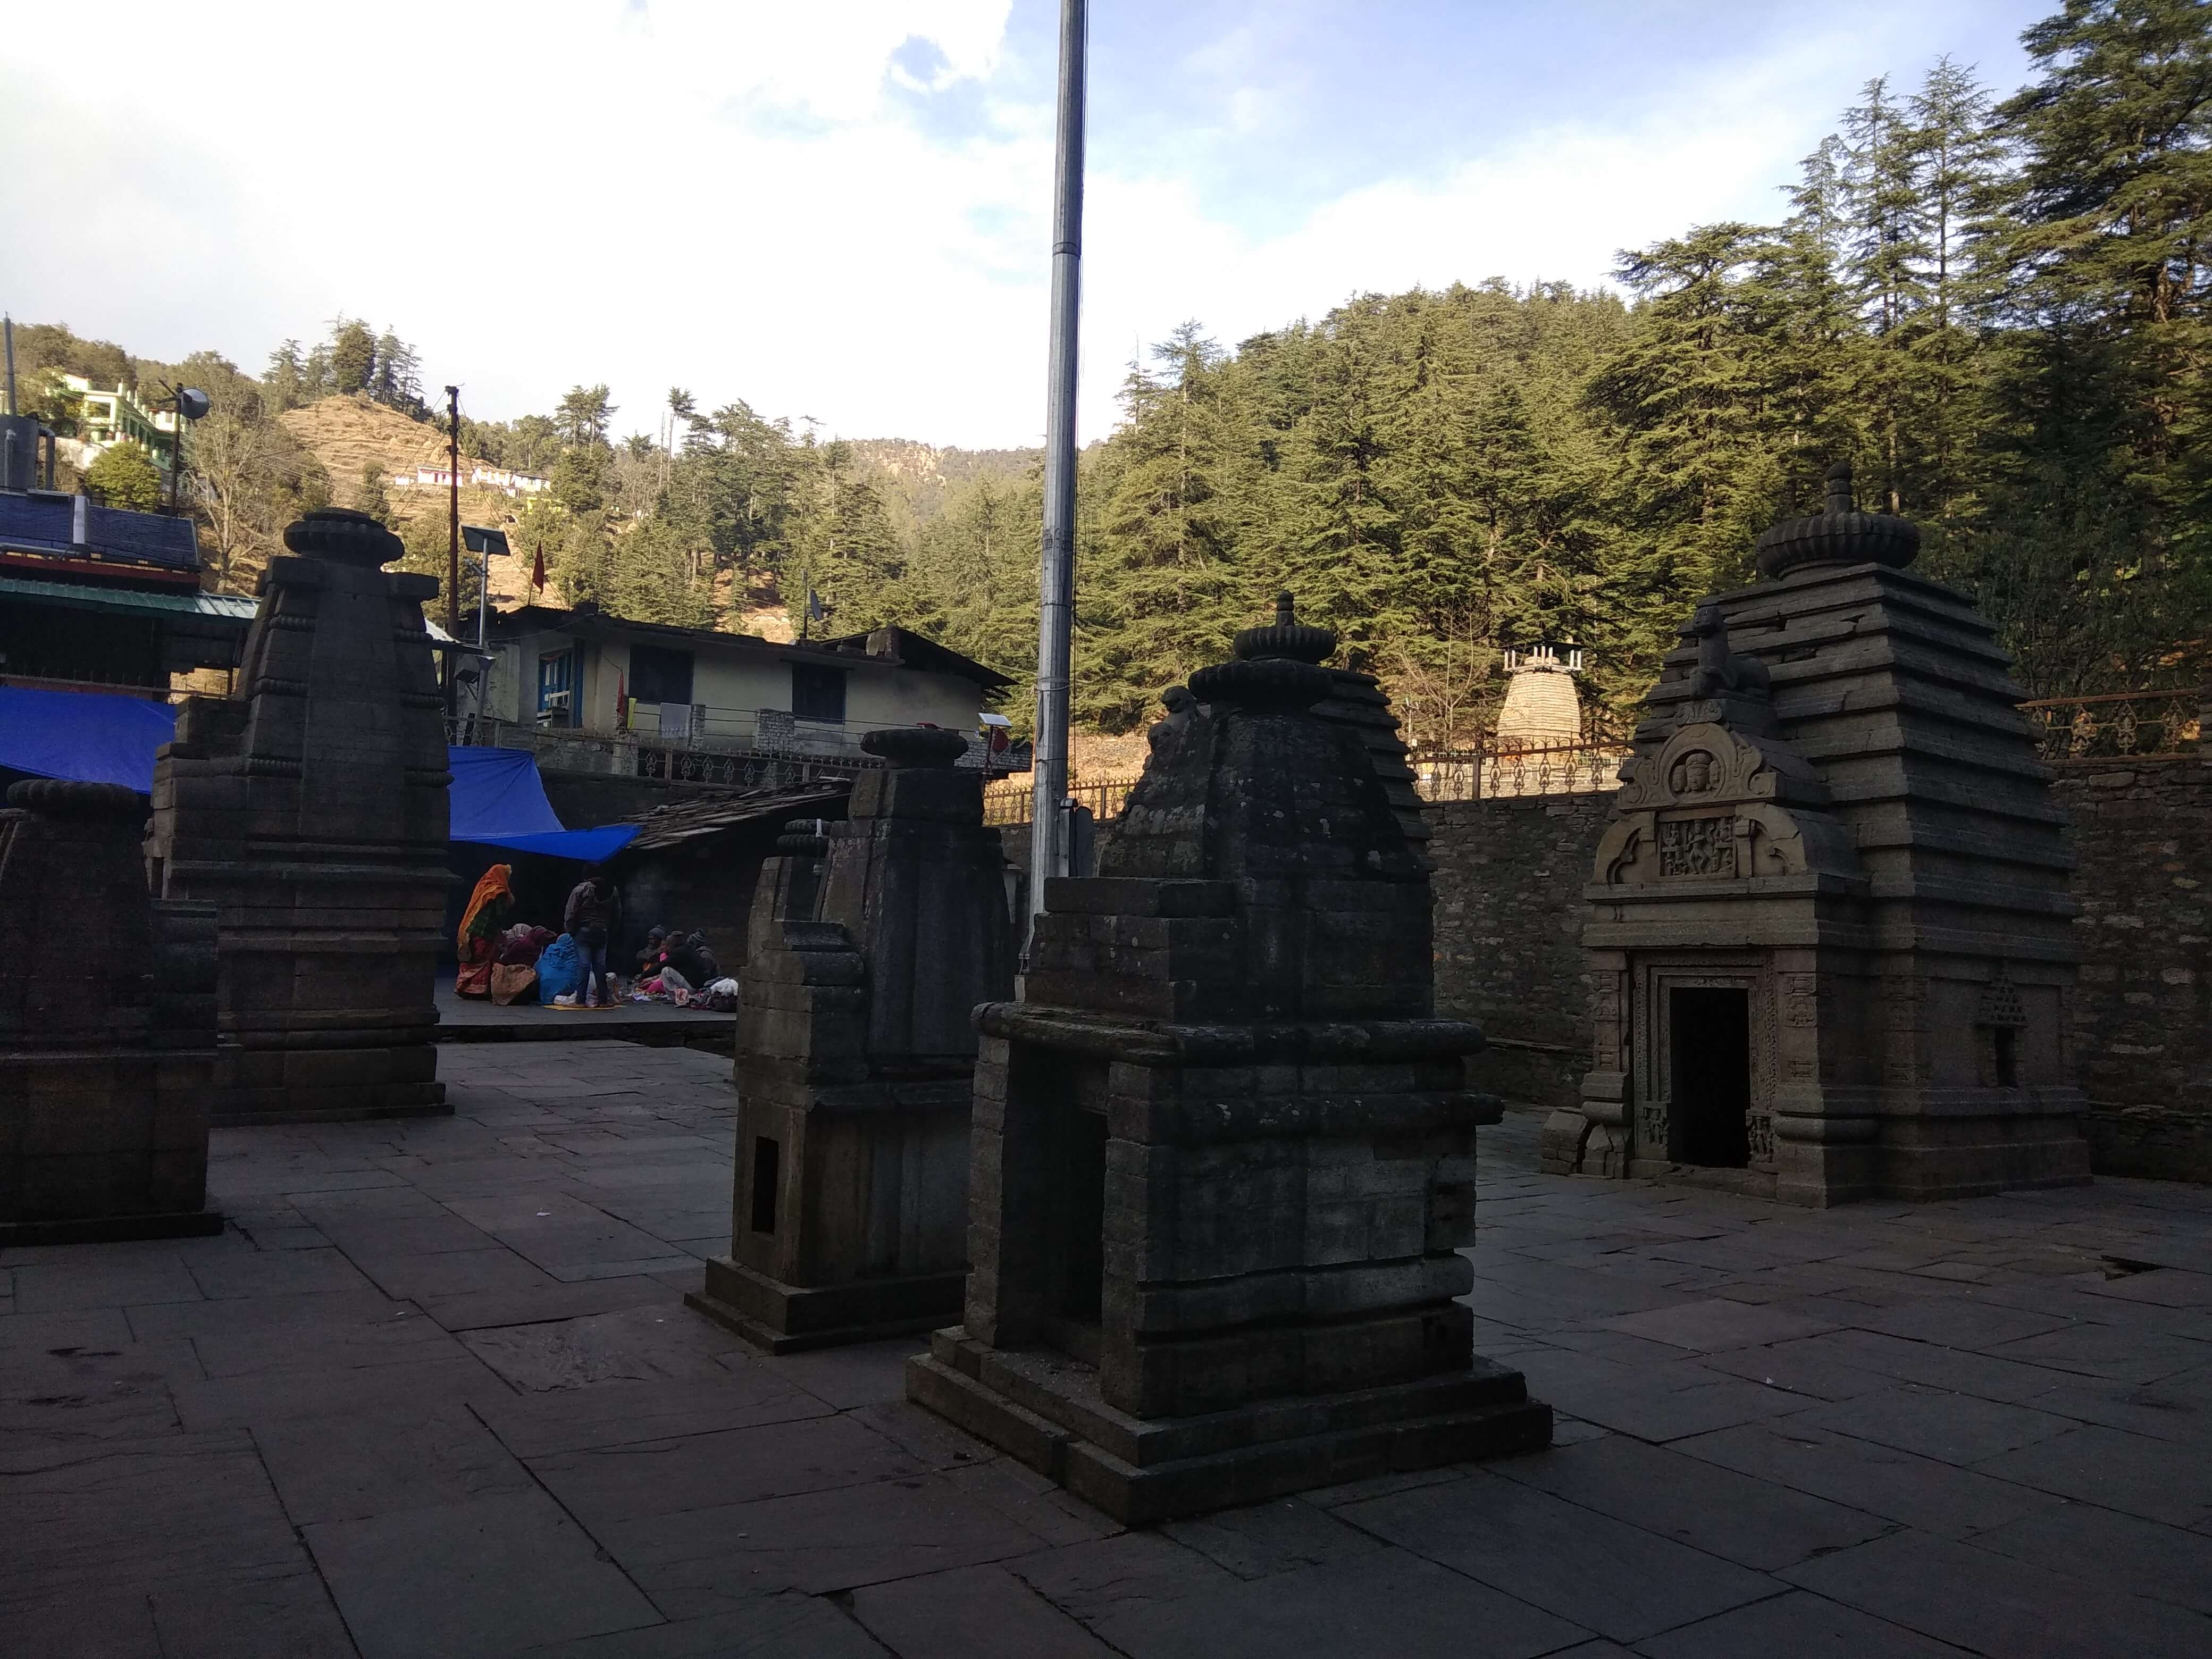 Jageshwar Mahadev Temple